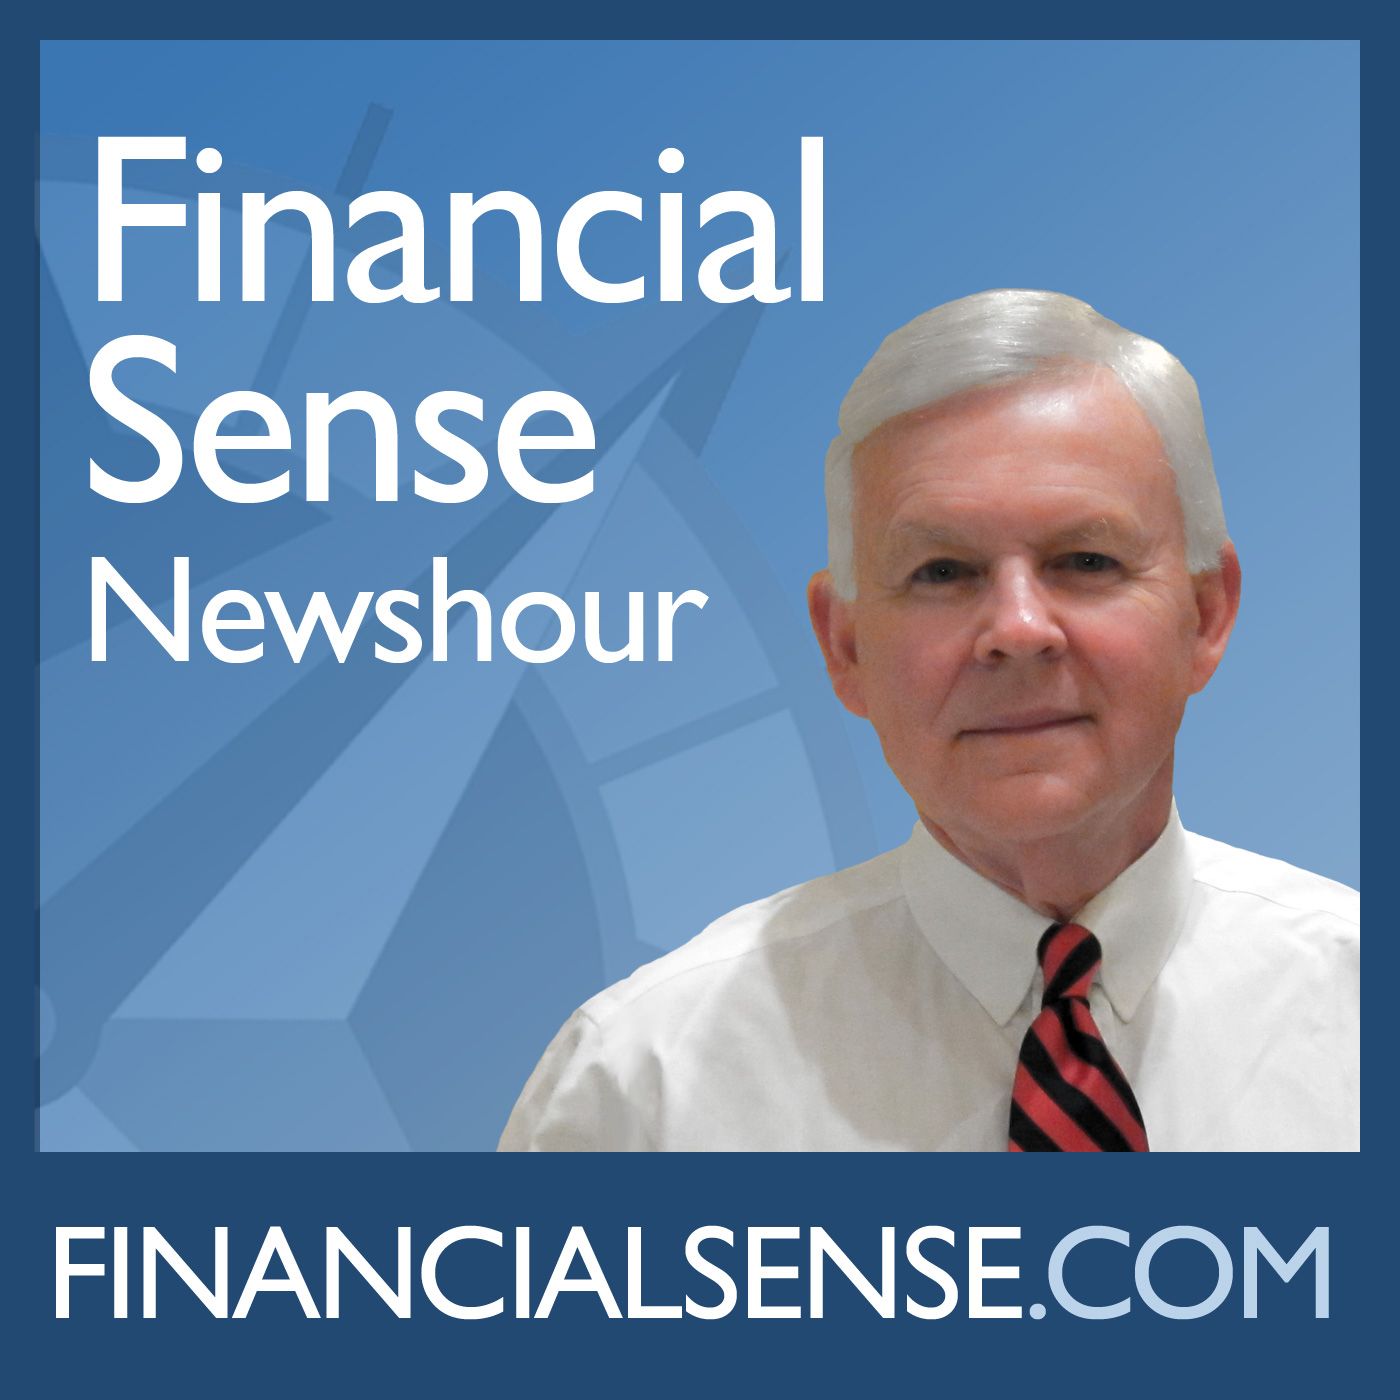 Financial Sense Newshour